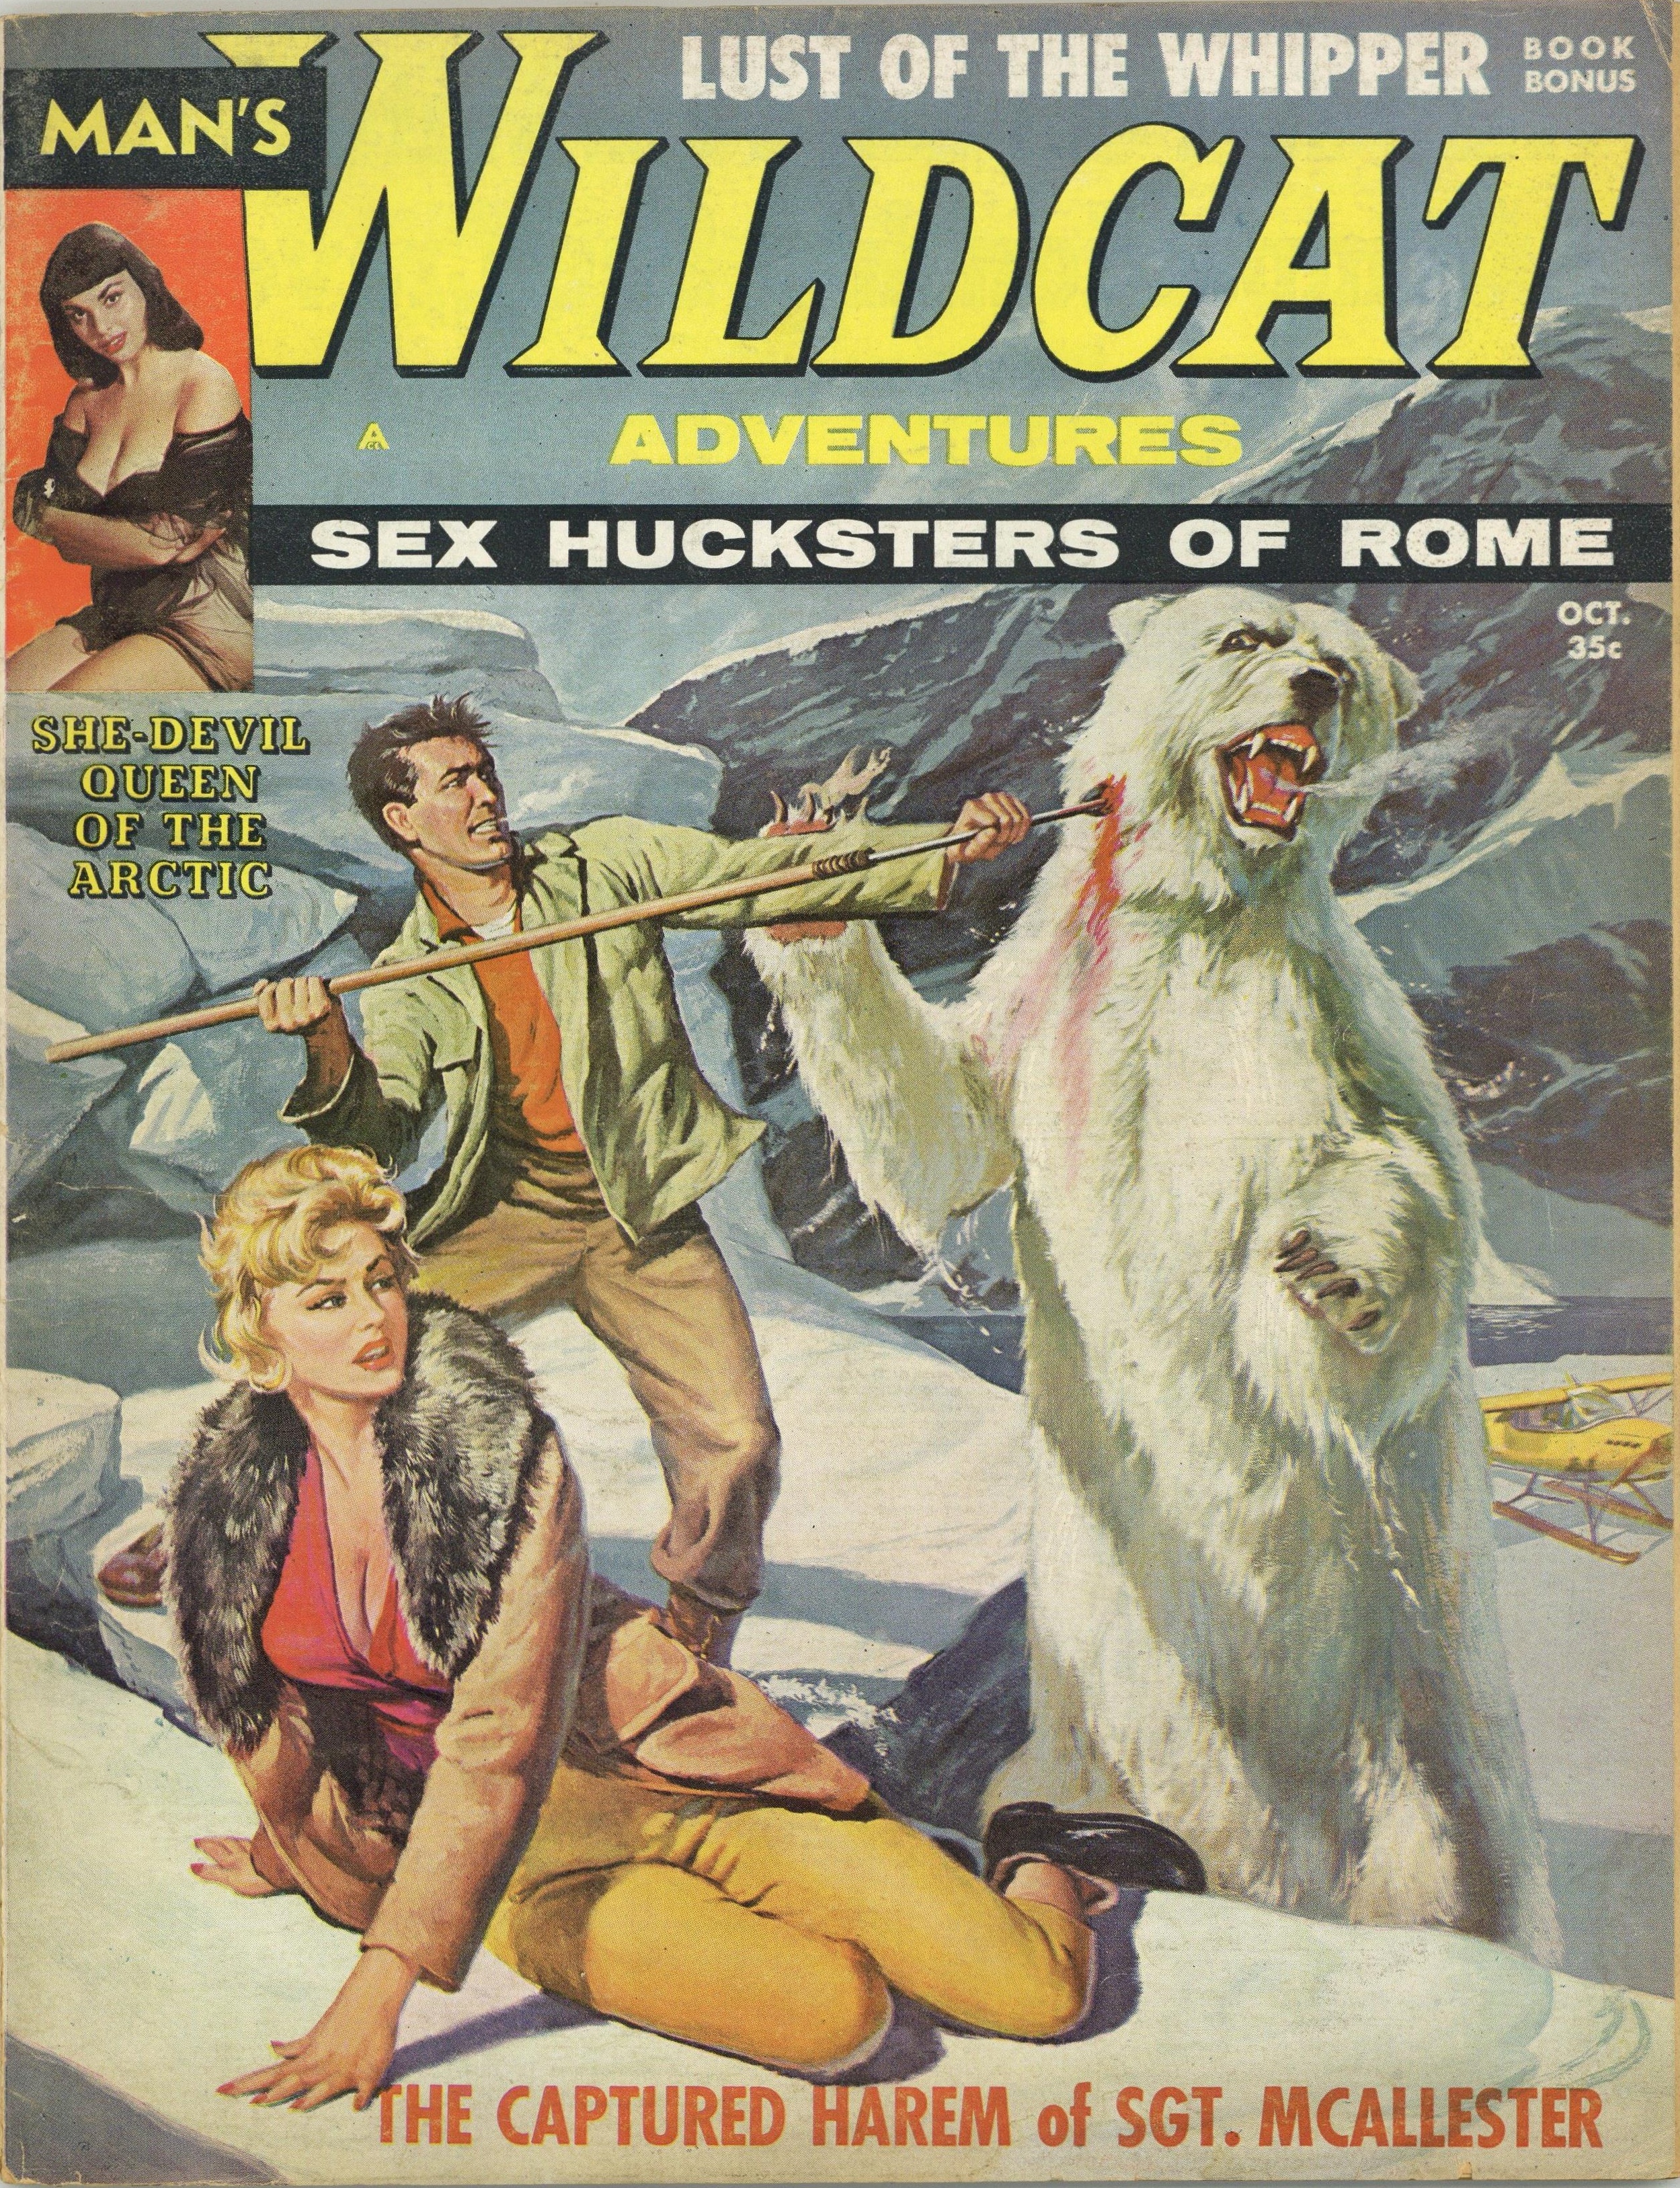 Adventures magazine. Wildcat Adventures журналы. Adventures журналы иллюстрации. Man's Adventure журнал. Мужской журнал Дикие кошки.